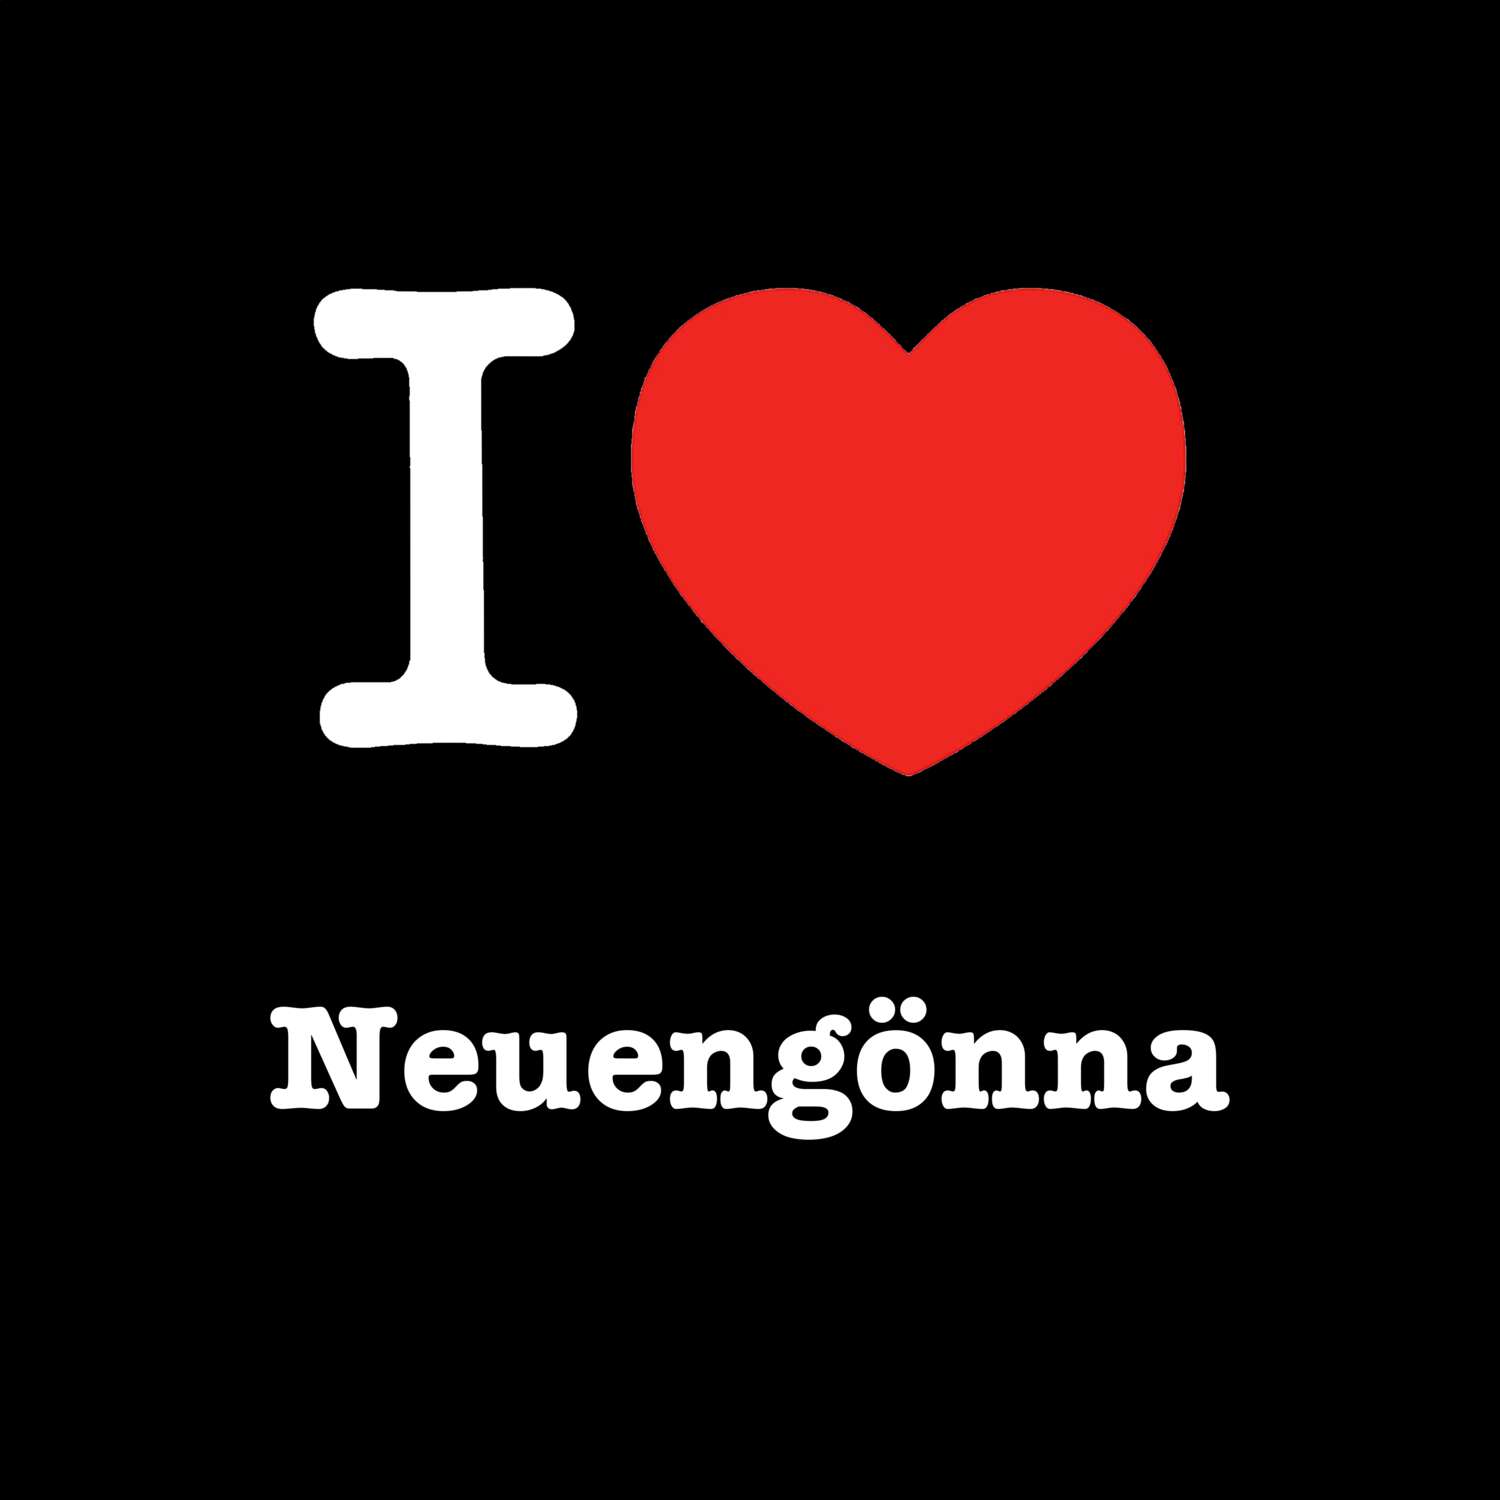 Neuengönna T-Shirt »I love«